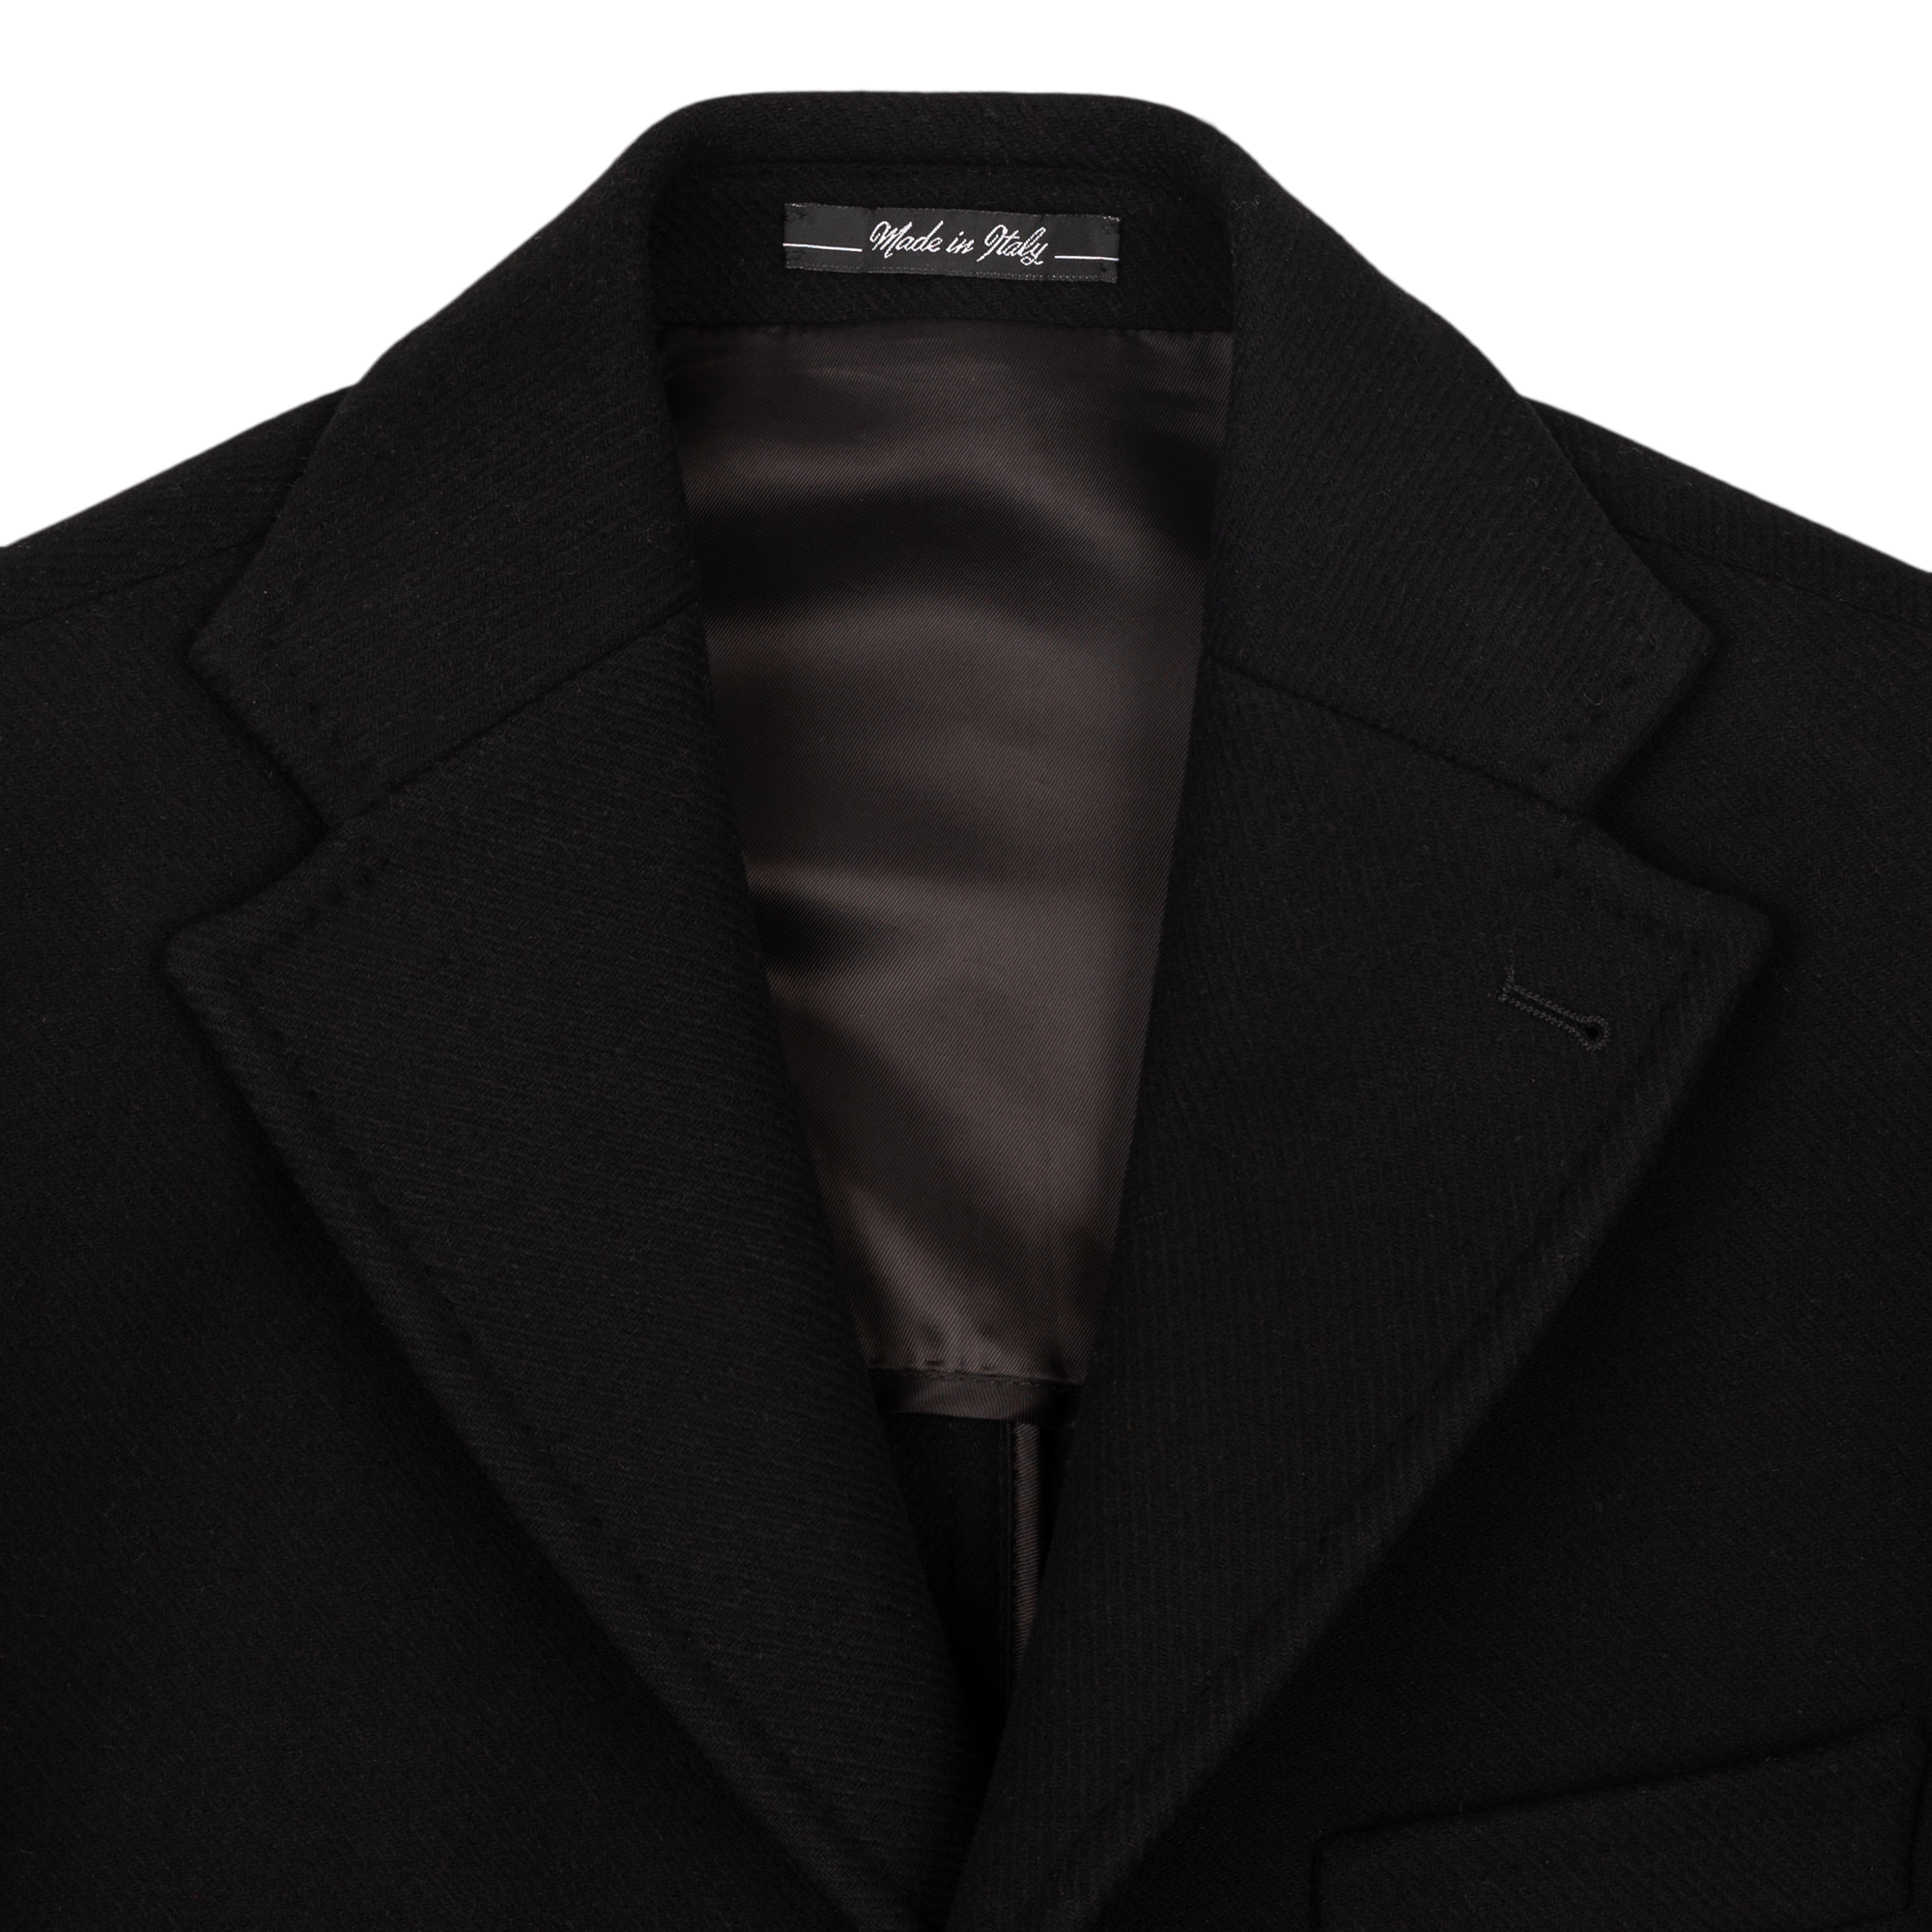 Plain Black Coat Blma135W.1.1